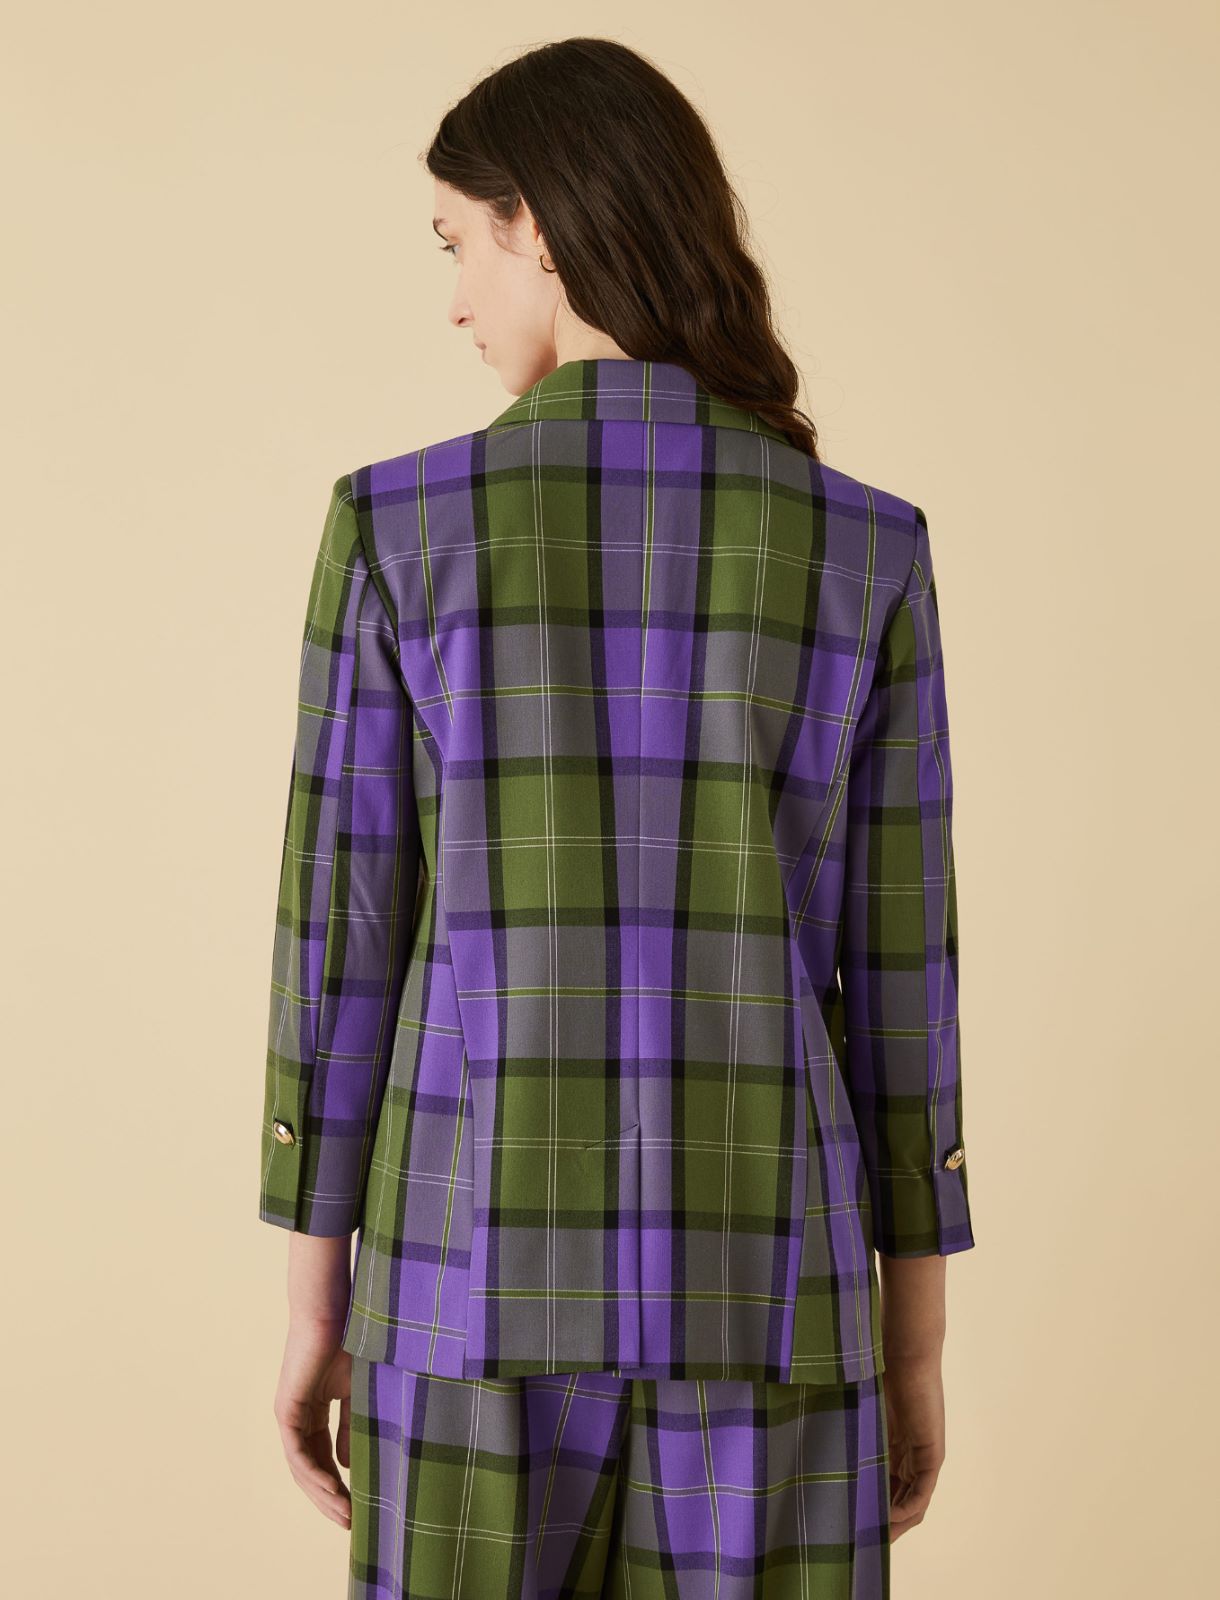 Circle To Square Plum Coat Buttons Per 6 — L'Etoffe Fabrics Online